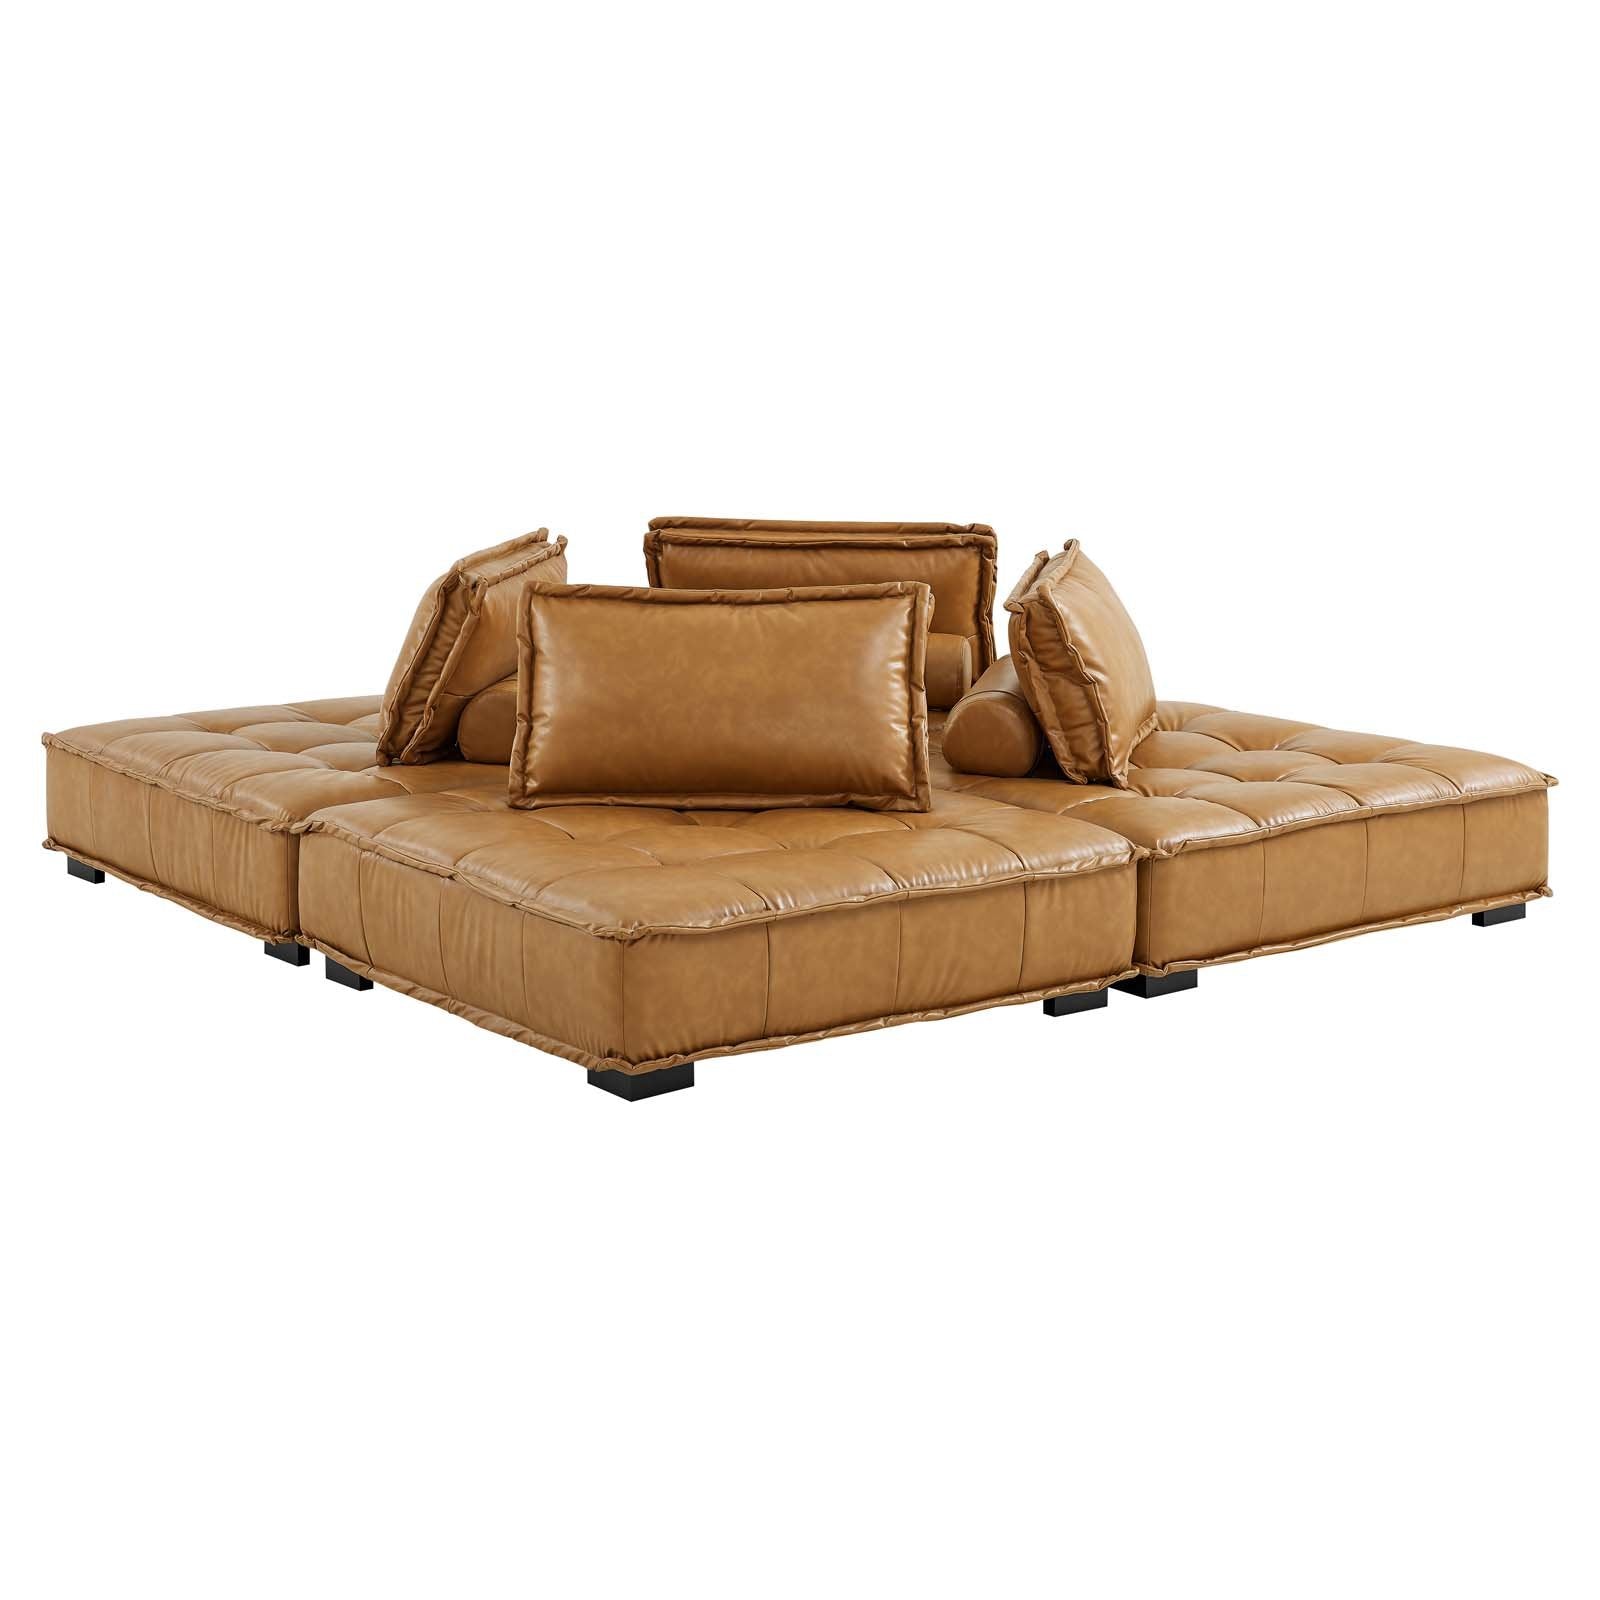 Saunter Tufted Vegan Leather 4-Piece Sectional Sofa